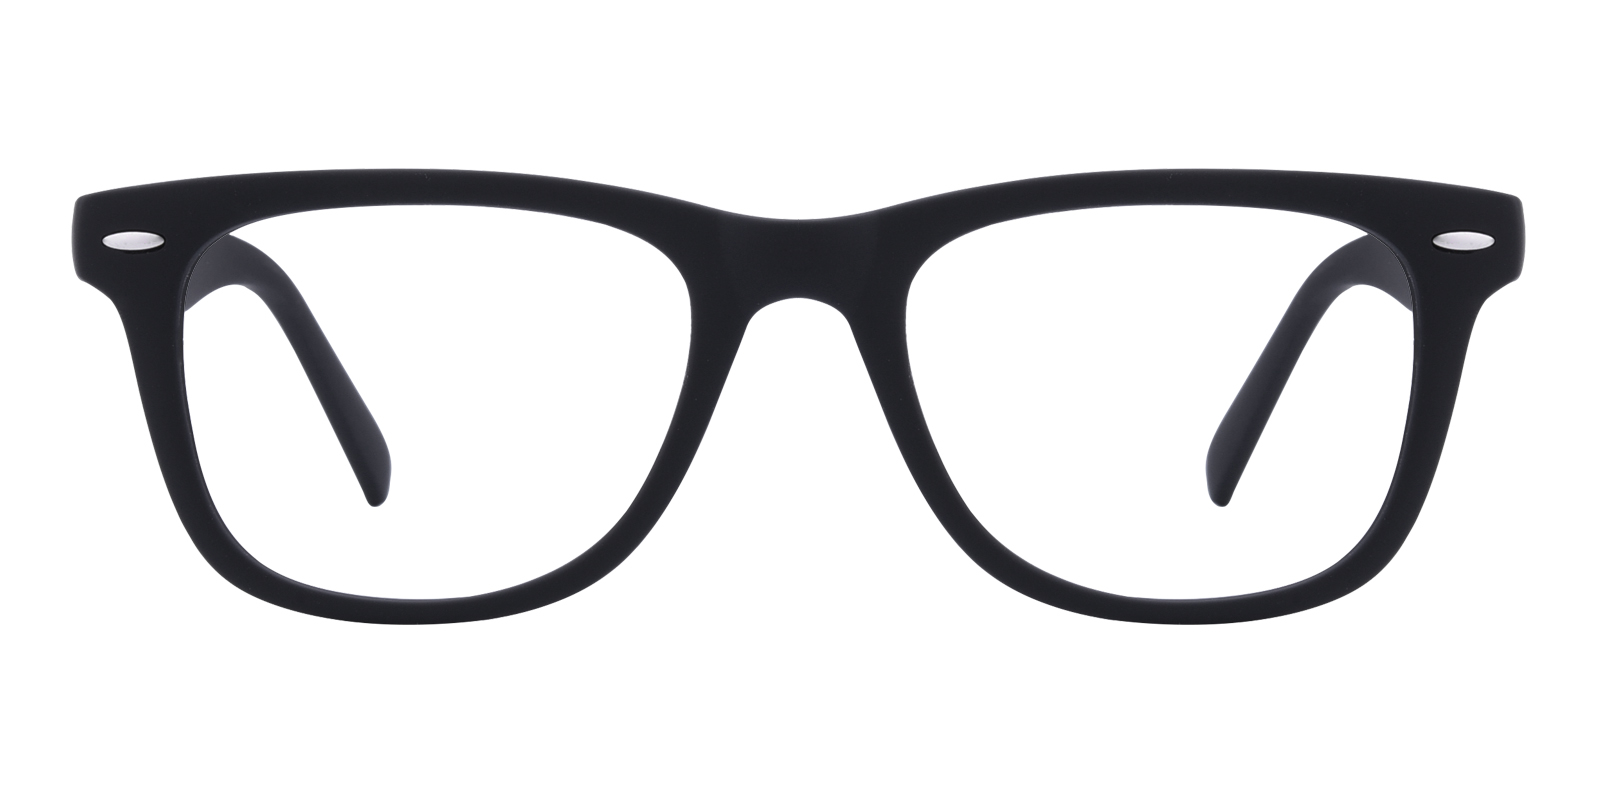 super hipster glasses clipart